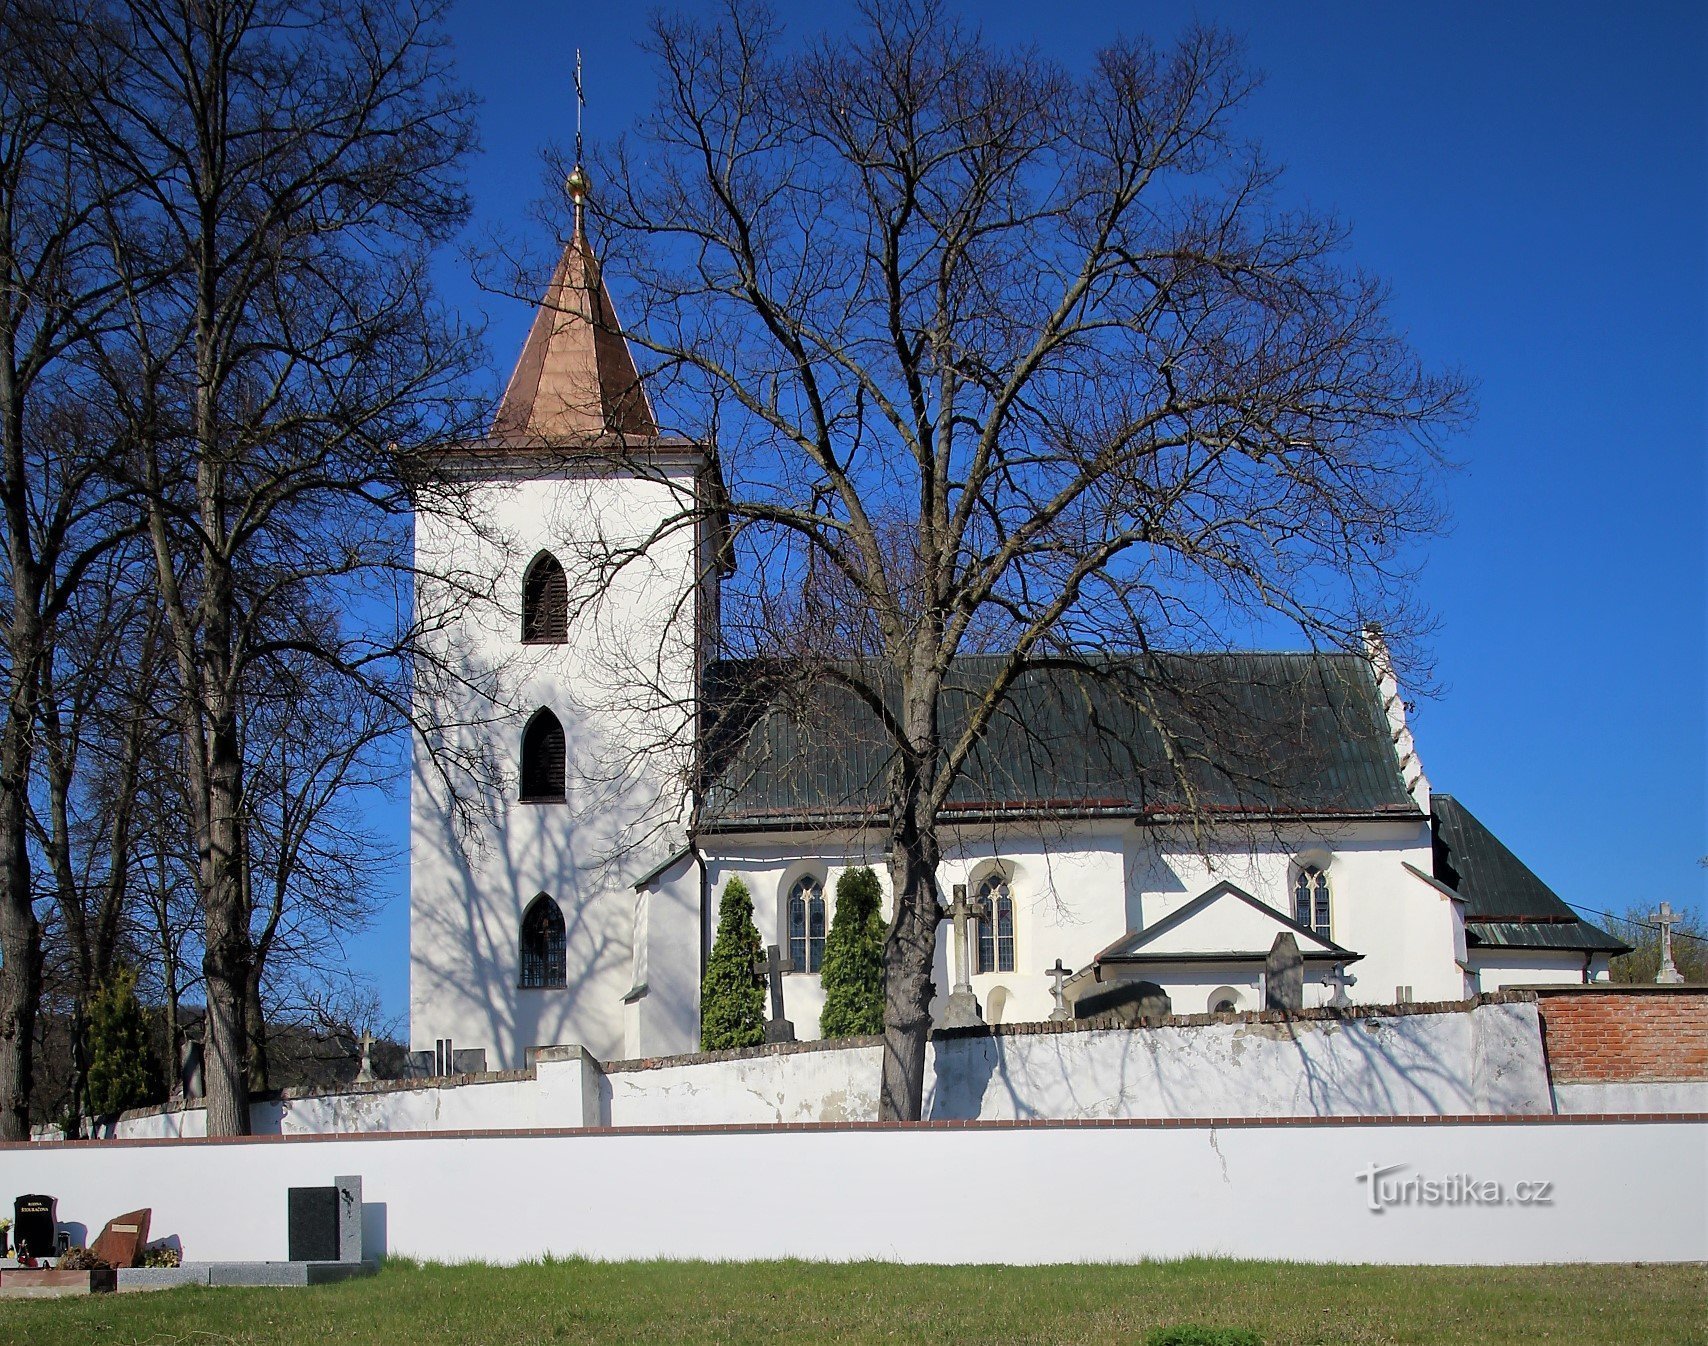 Lelekovice - church of St. Philip and Jacob